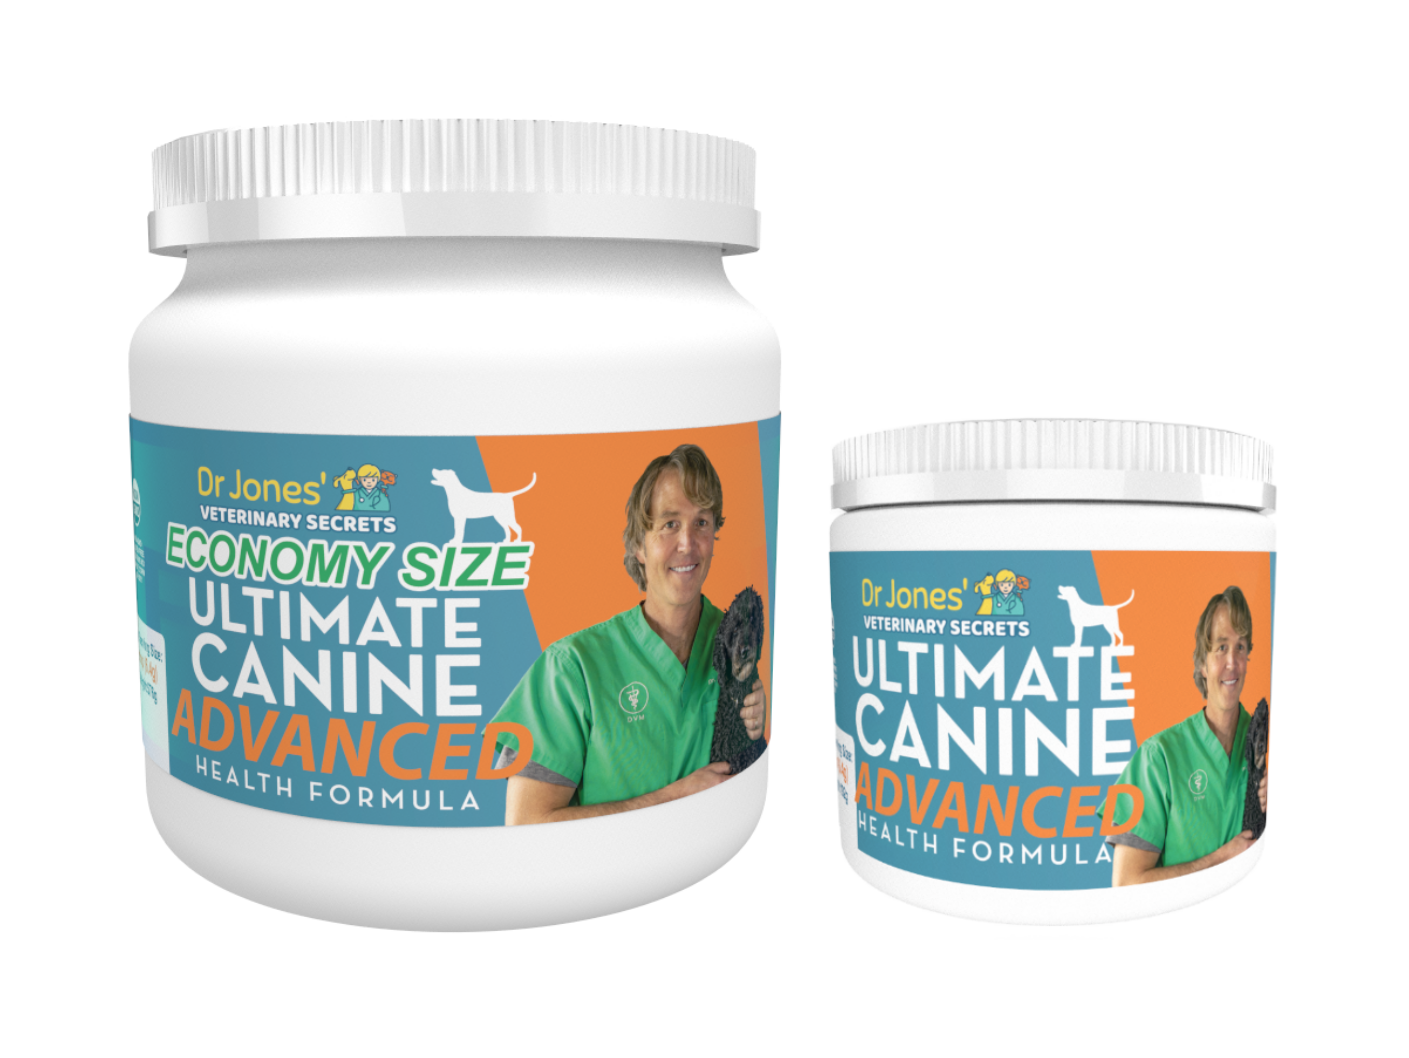 Dr. Jones' Ultimate Canine Advanced Health Formula